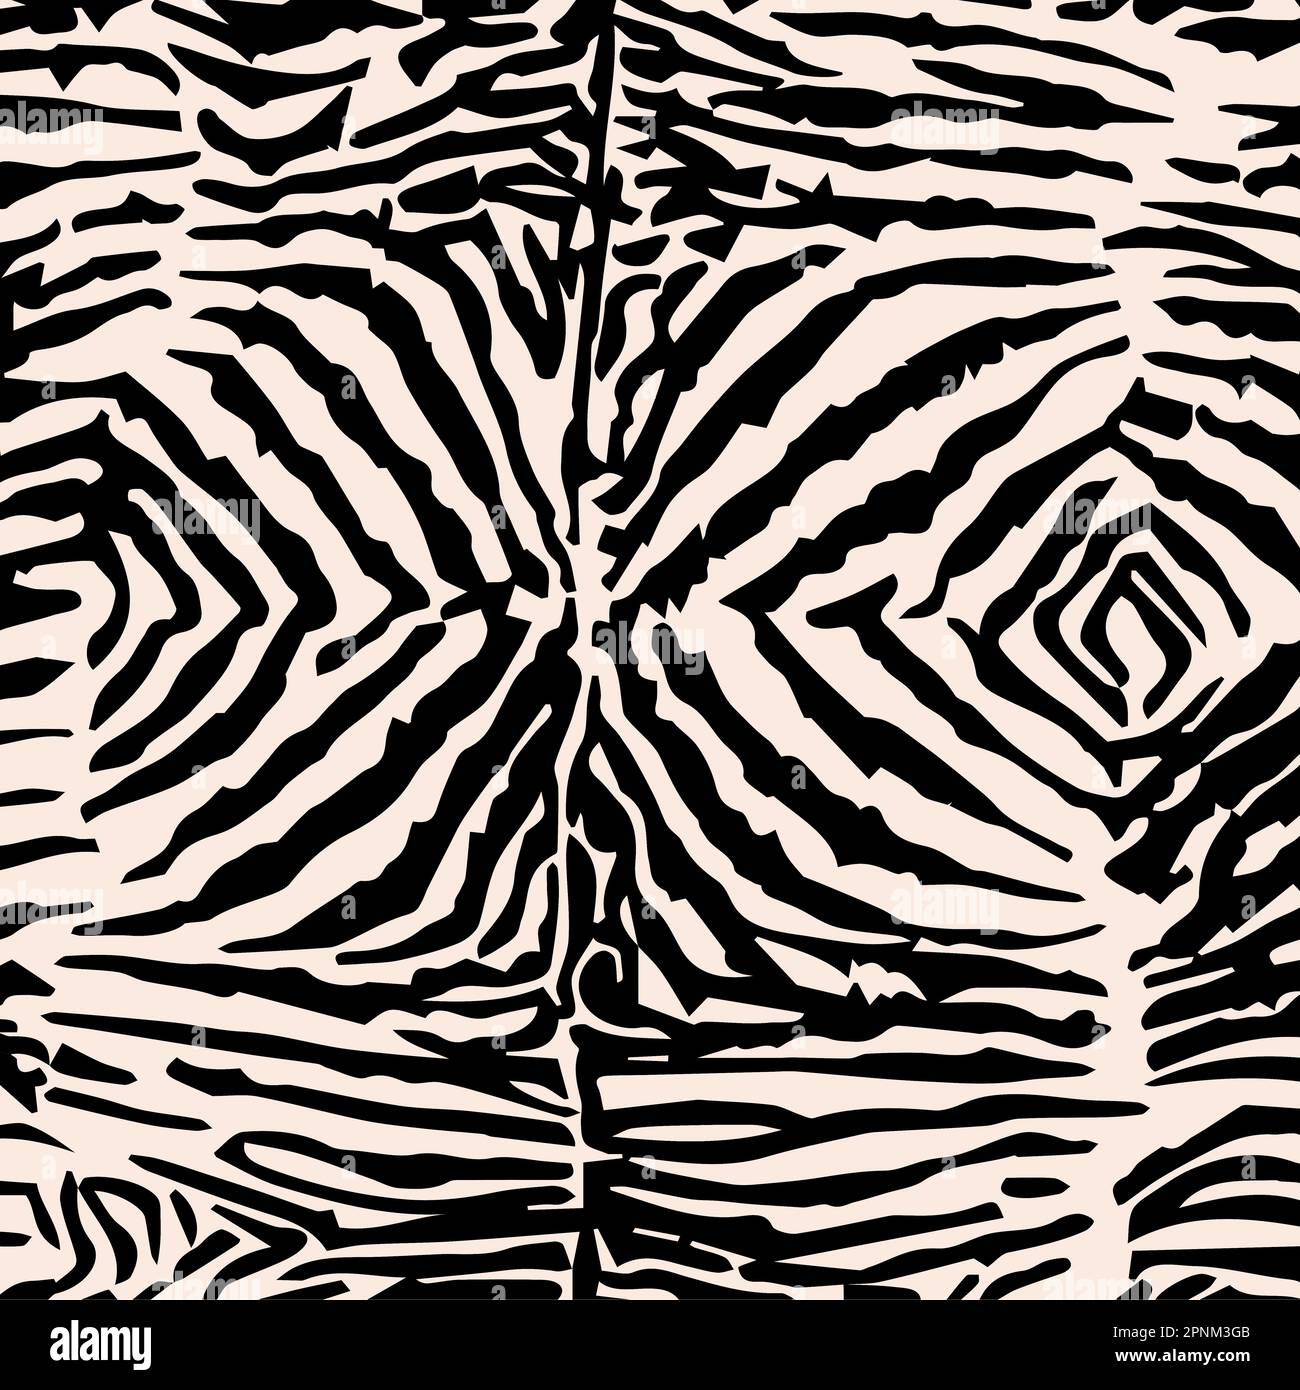 Seamless zebra pattern, zebra, tiger skin, African animal print. Stock Photo